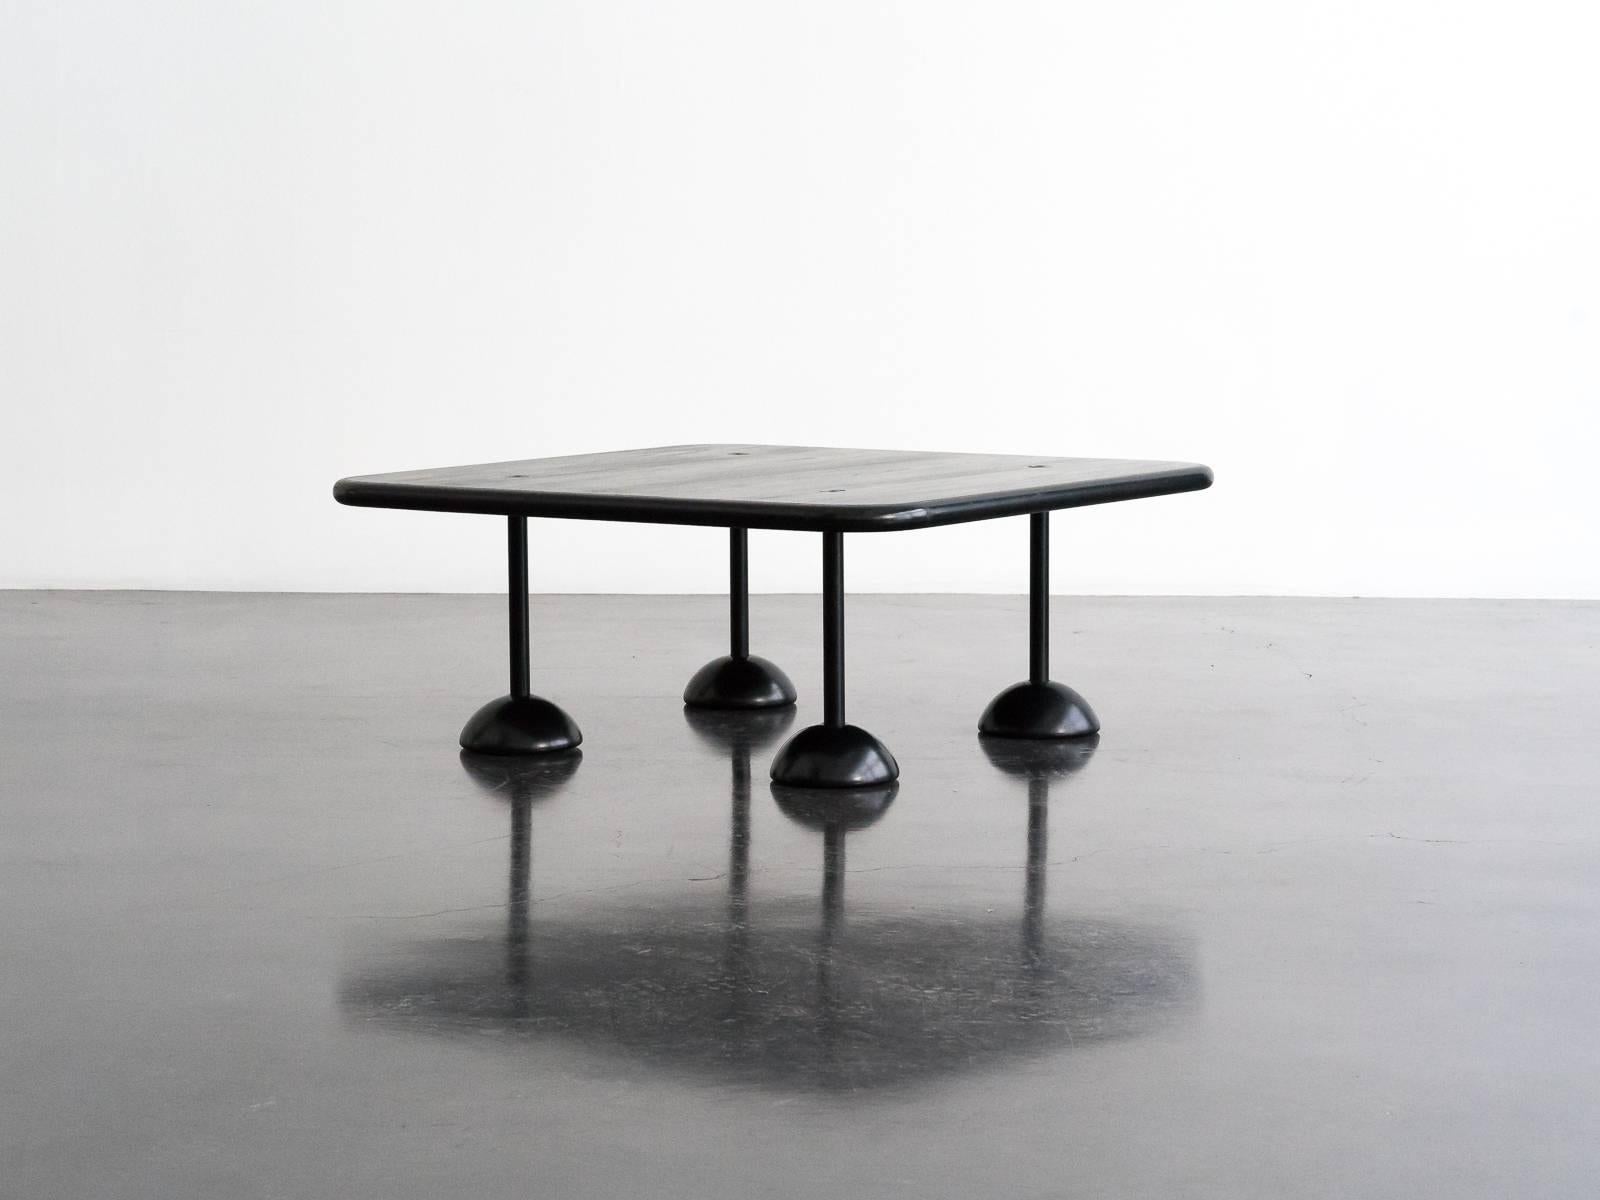 A unique low table designed by Franco Poli for Bernini in 1980. The square 